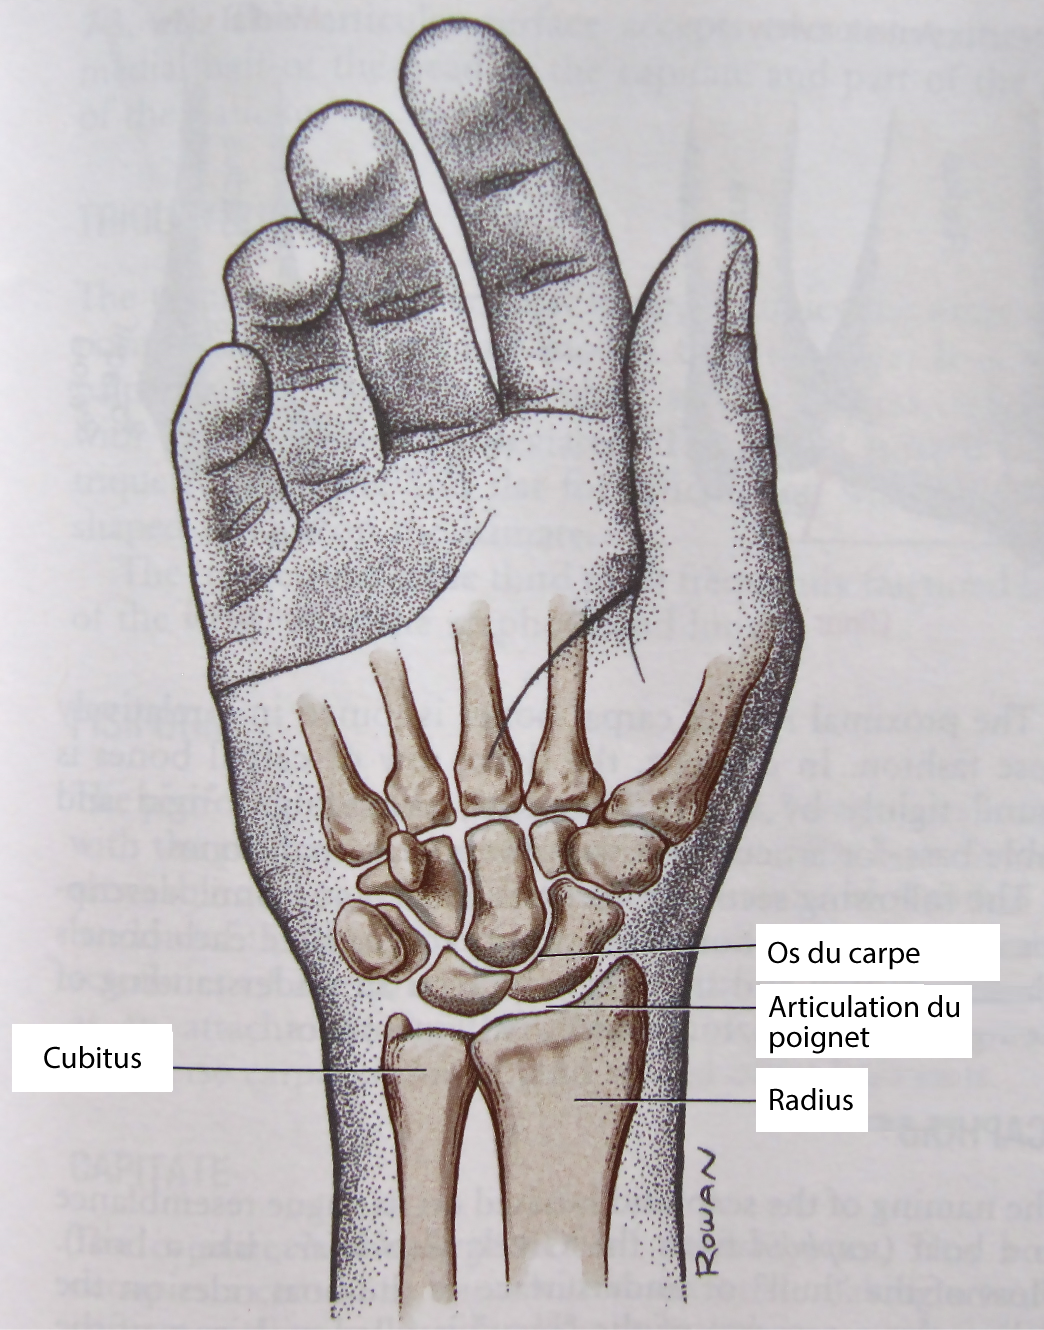 Arthrose du poignet | Traitement naturel, Symptome, Remede, Operation